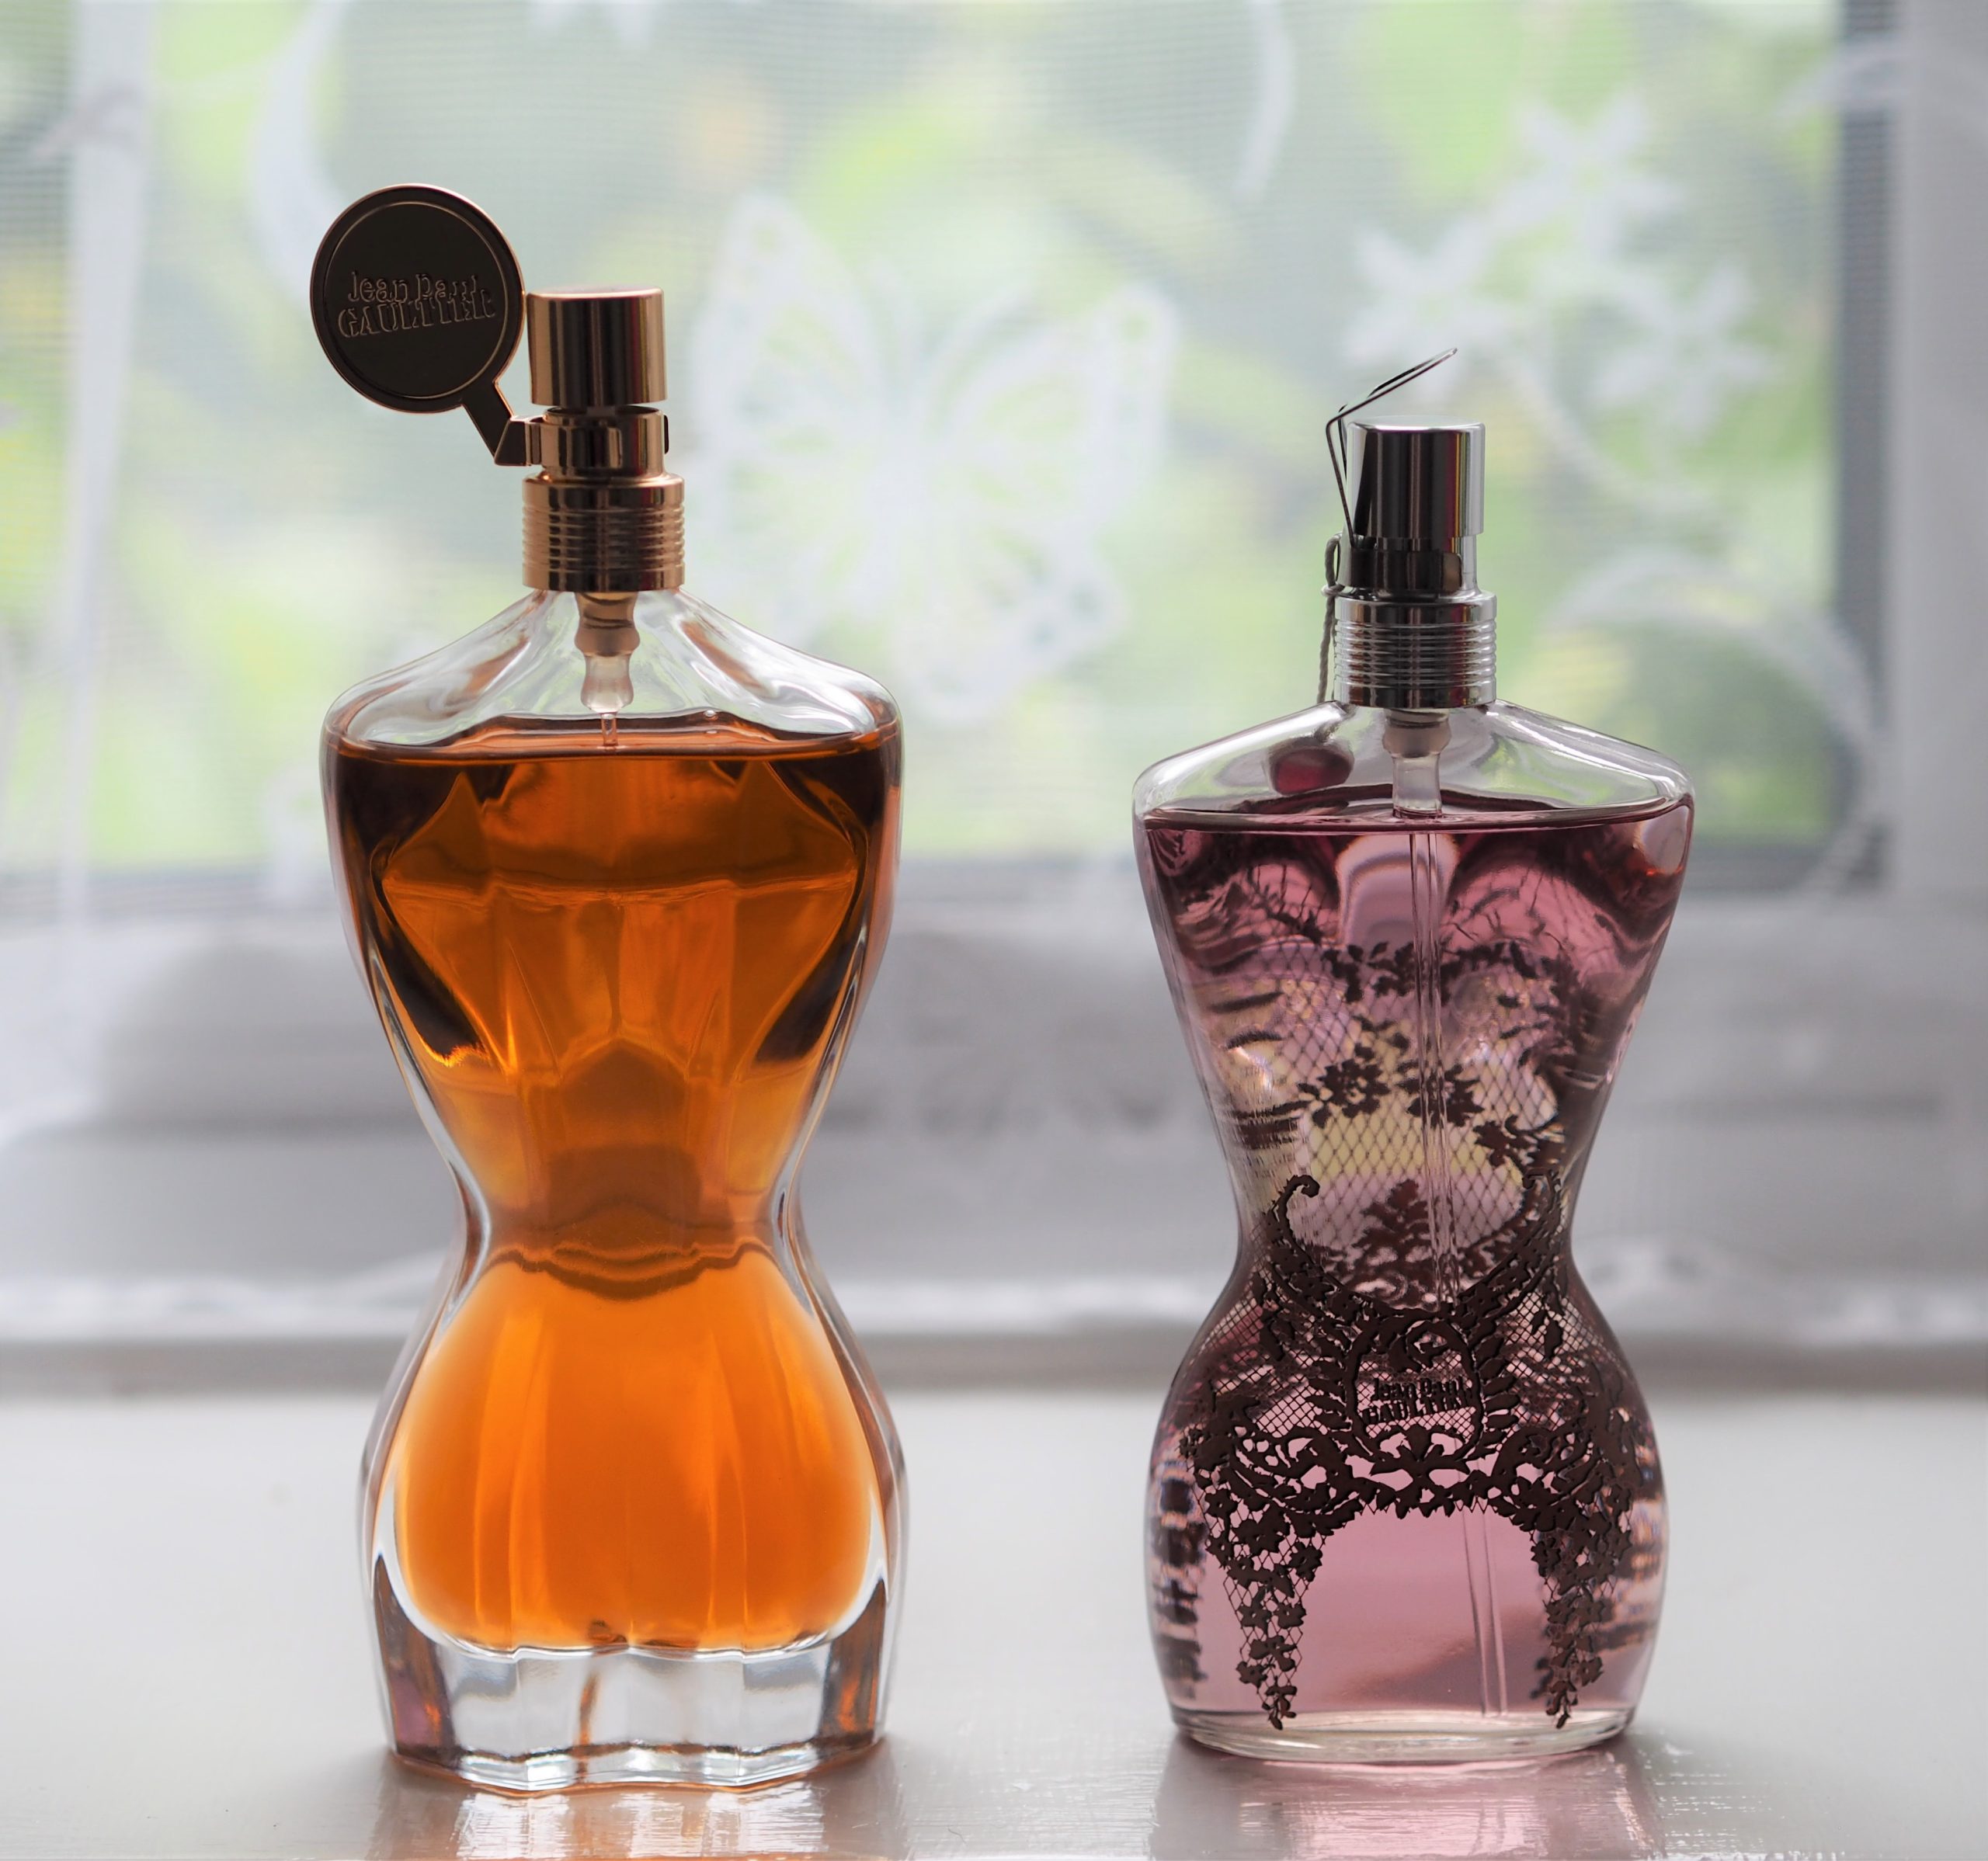 Jean Paul de Gaultier Geek Essence and UK Classique Beauty Parfum - Original